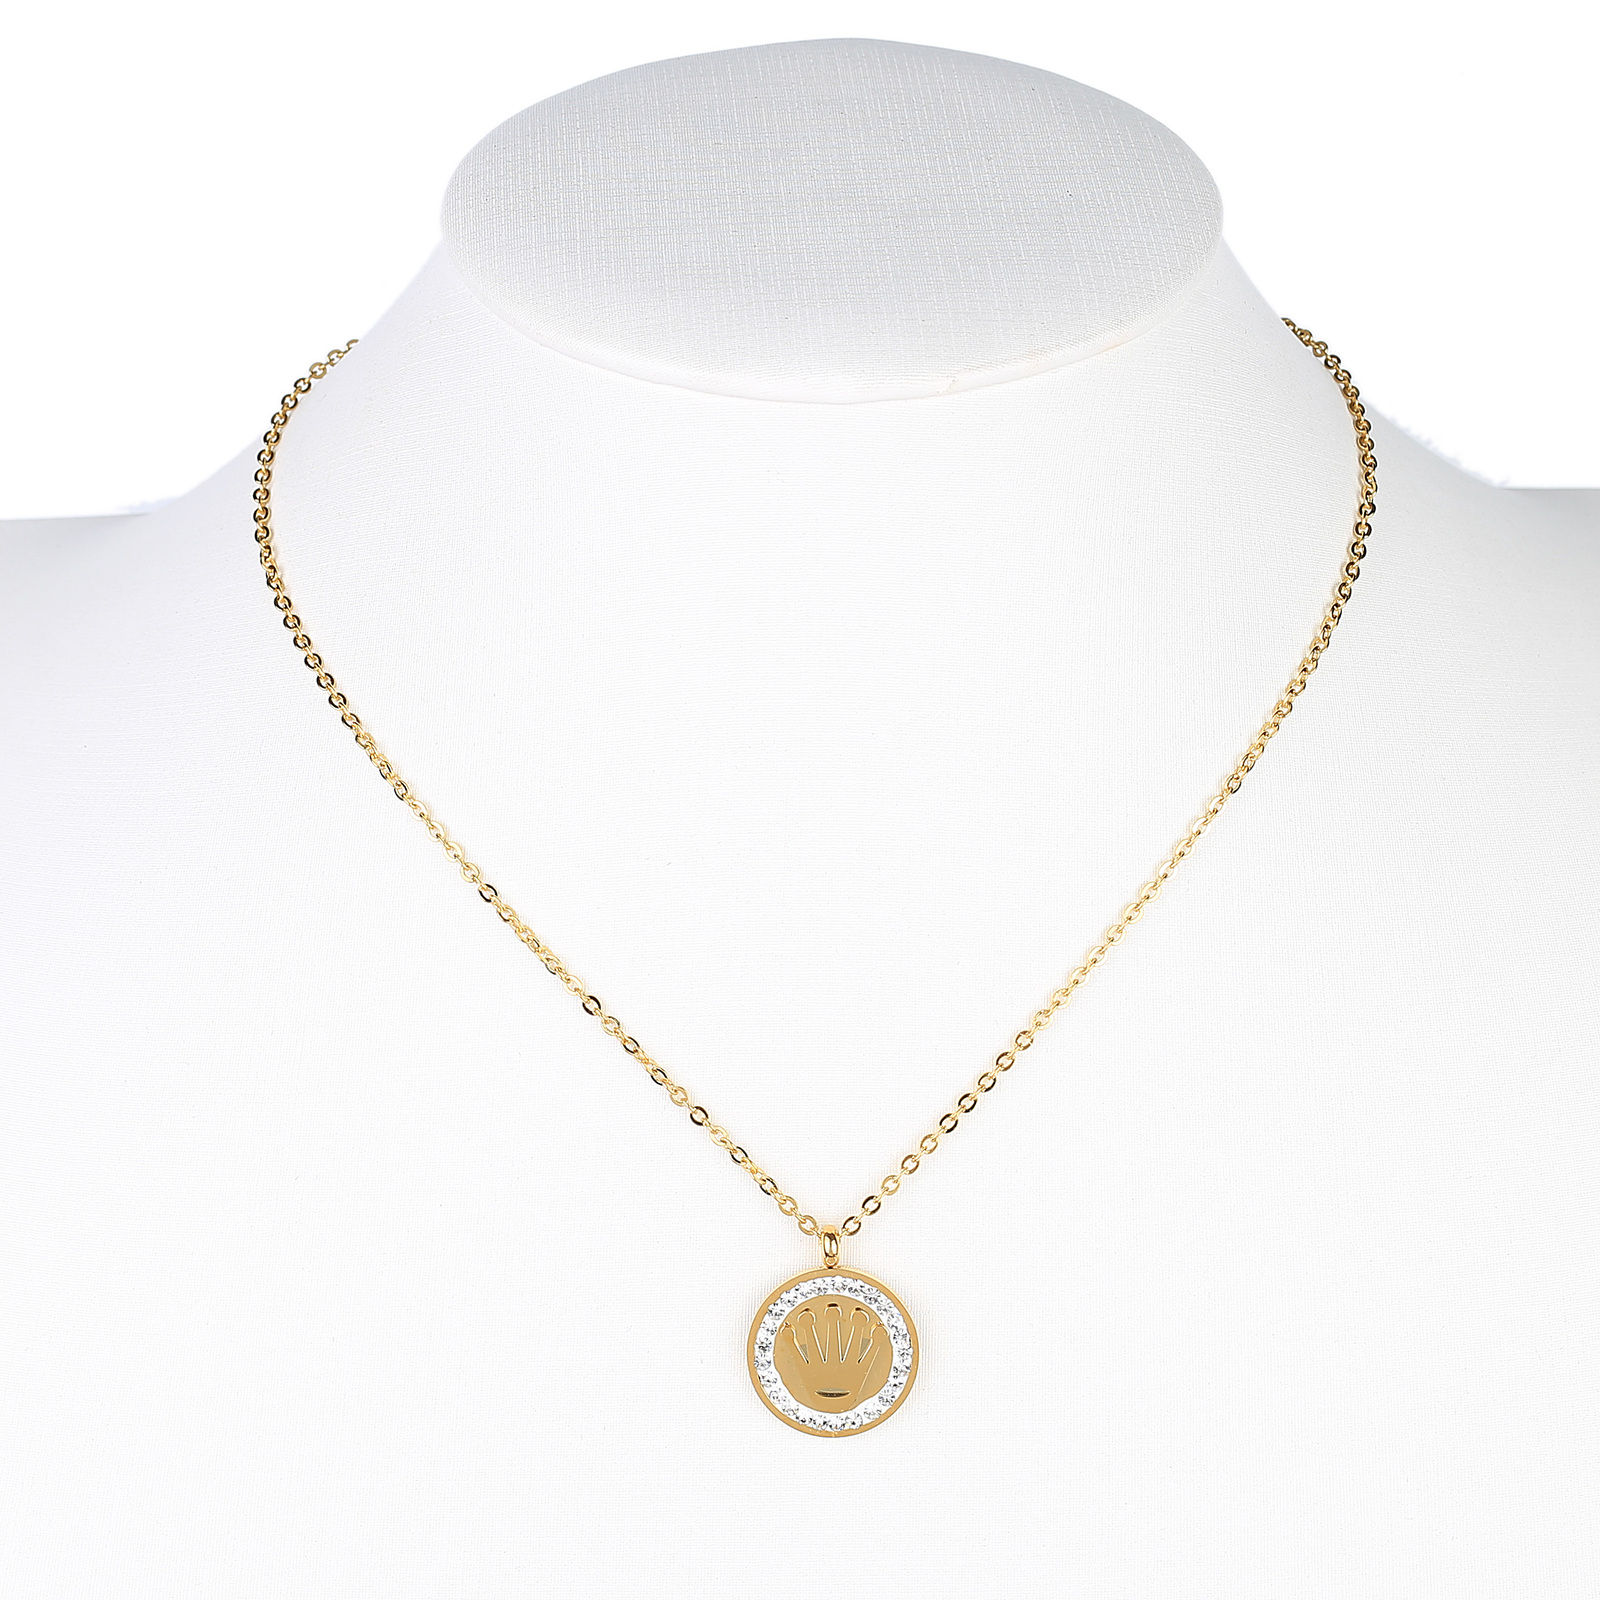 UE- Gold Tone Designer Necklace, Royal Crown Pendant & Swarovski Style Crystals  - $27.99